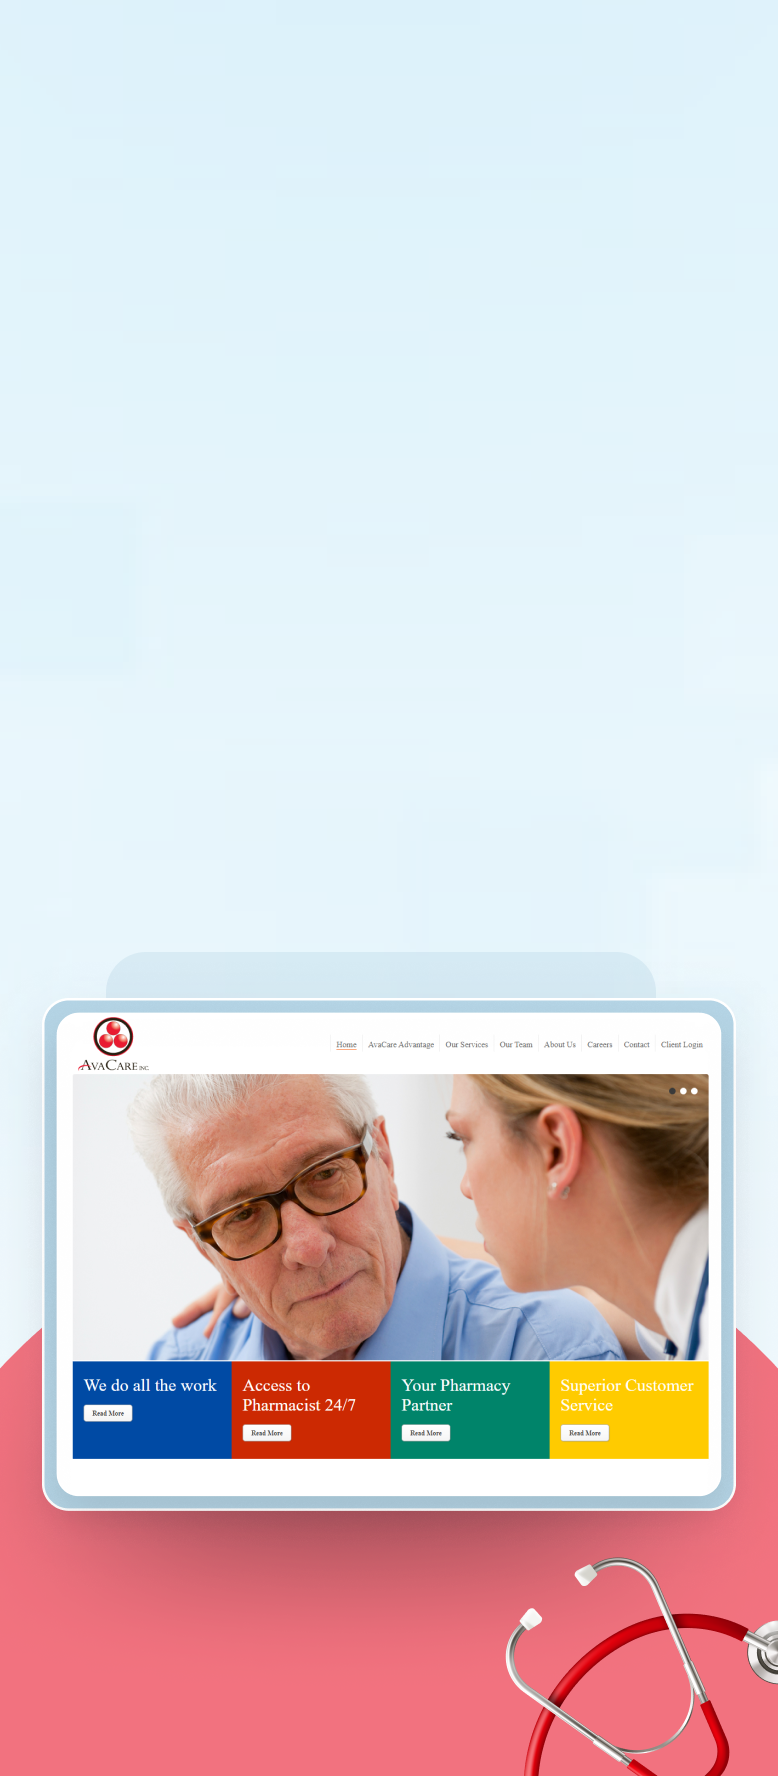 Establishing an Enterprise-Driven Web Service for a Hospice Pharmacy